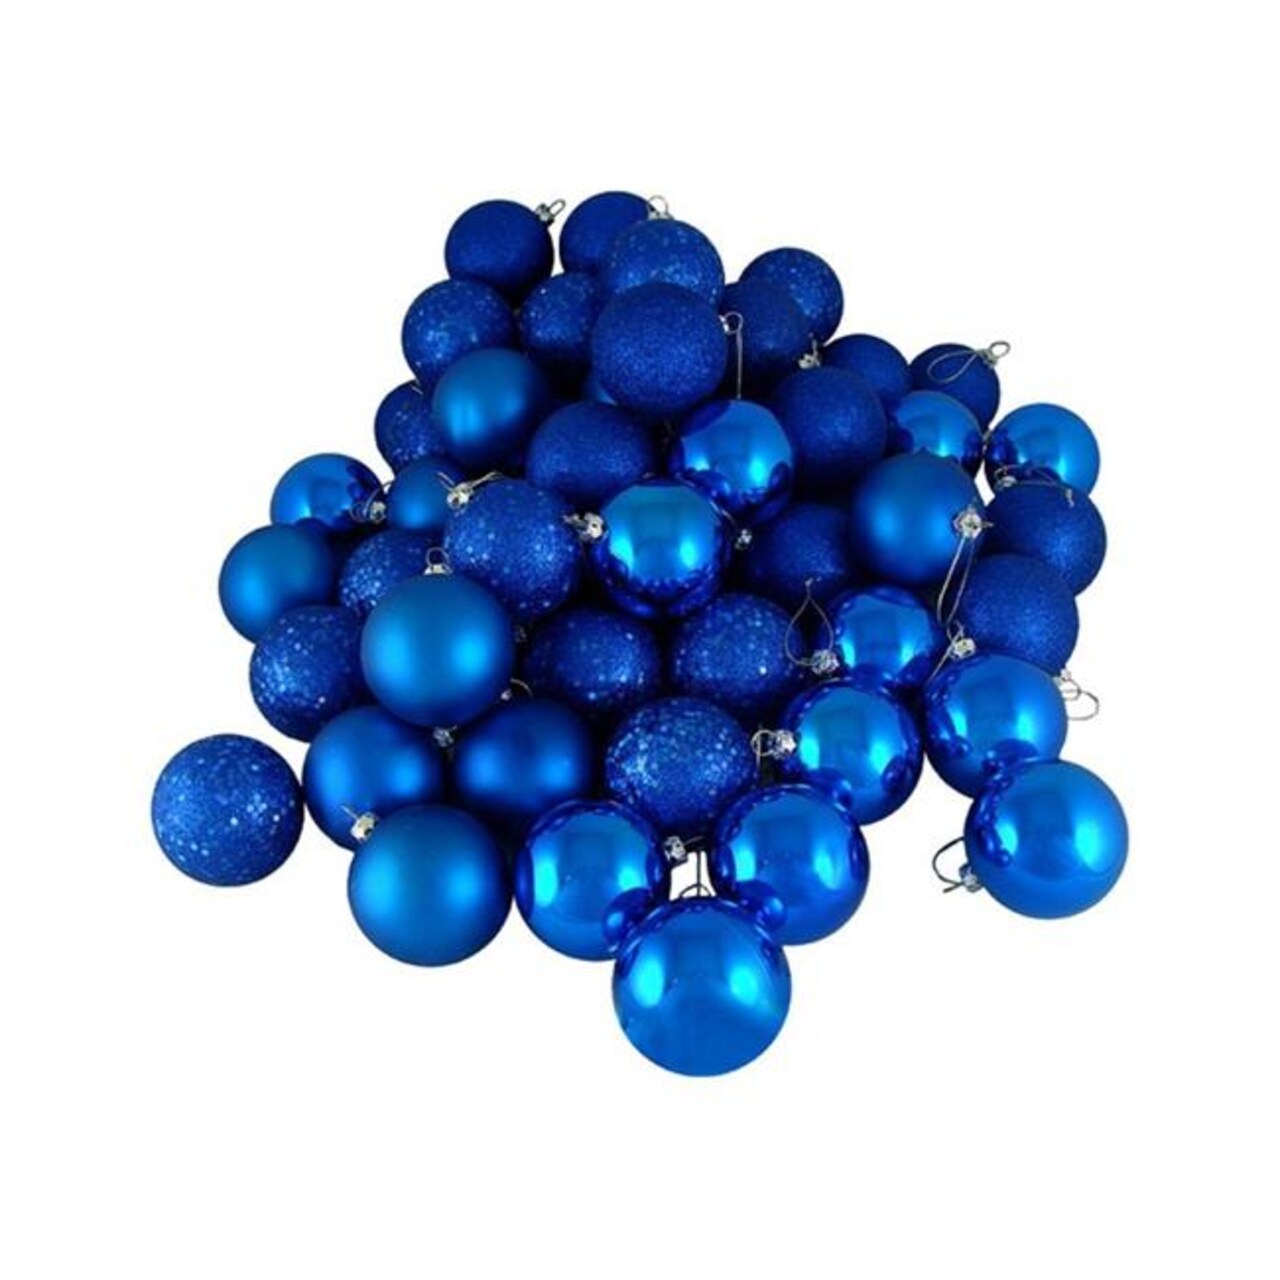 Northlight 32280353 2.5 in. 4-Finish Shatterproof Christmas Ball Ornaments, Lavish Blue - 24 Piece